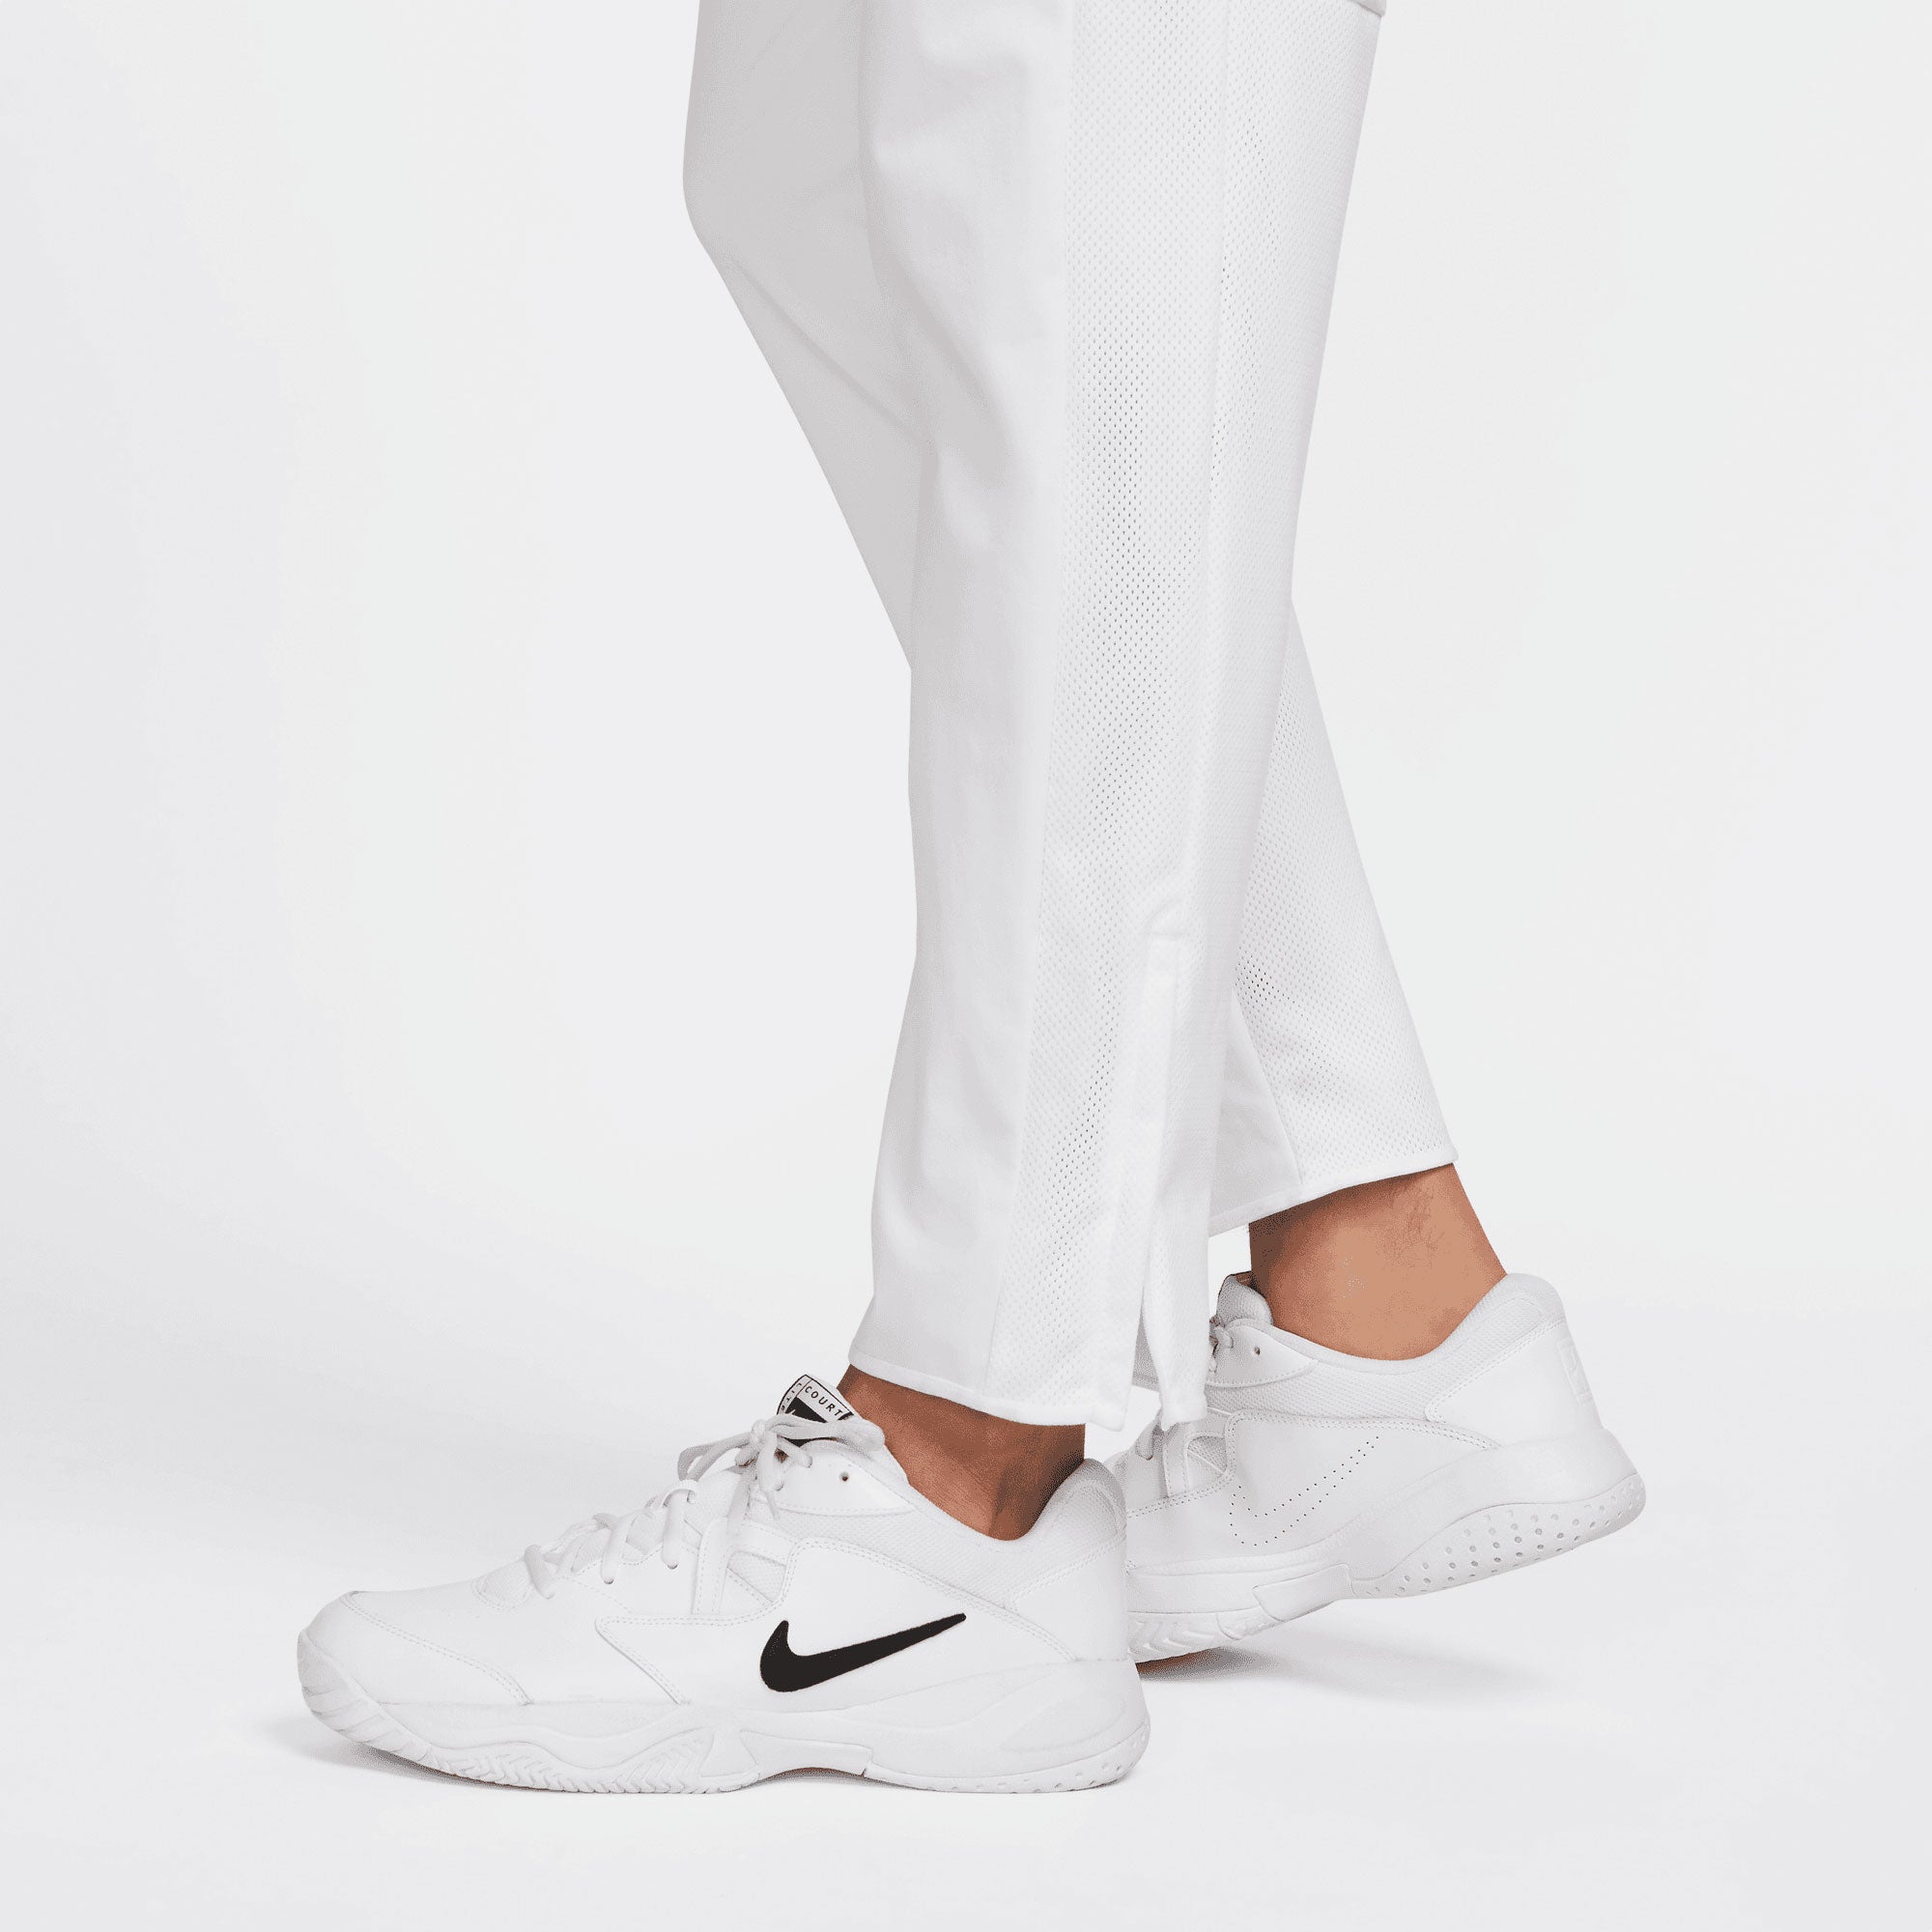 NikeCourt Advantage Men's Tennis Pants White (5)